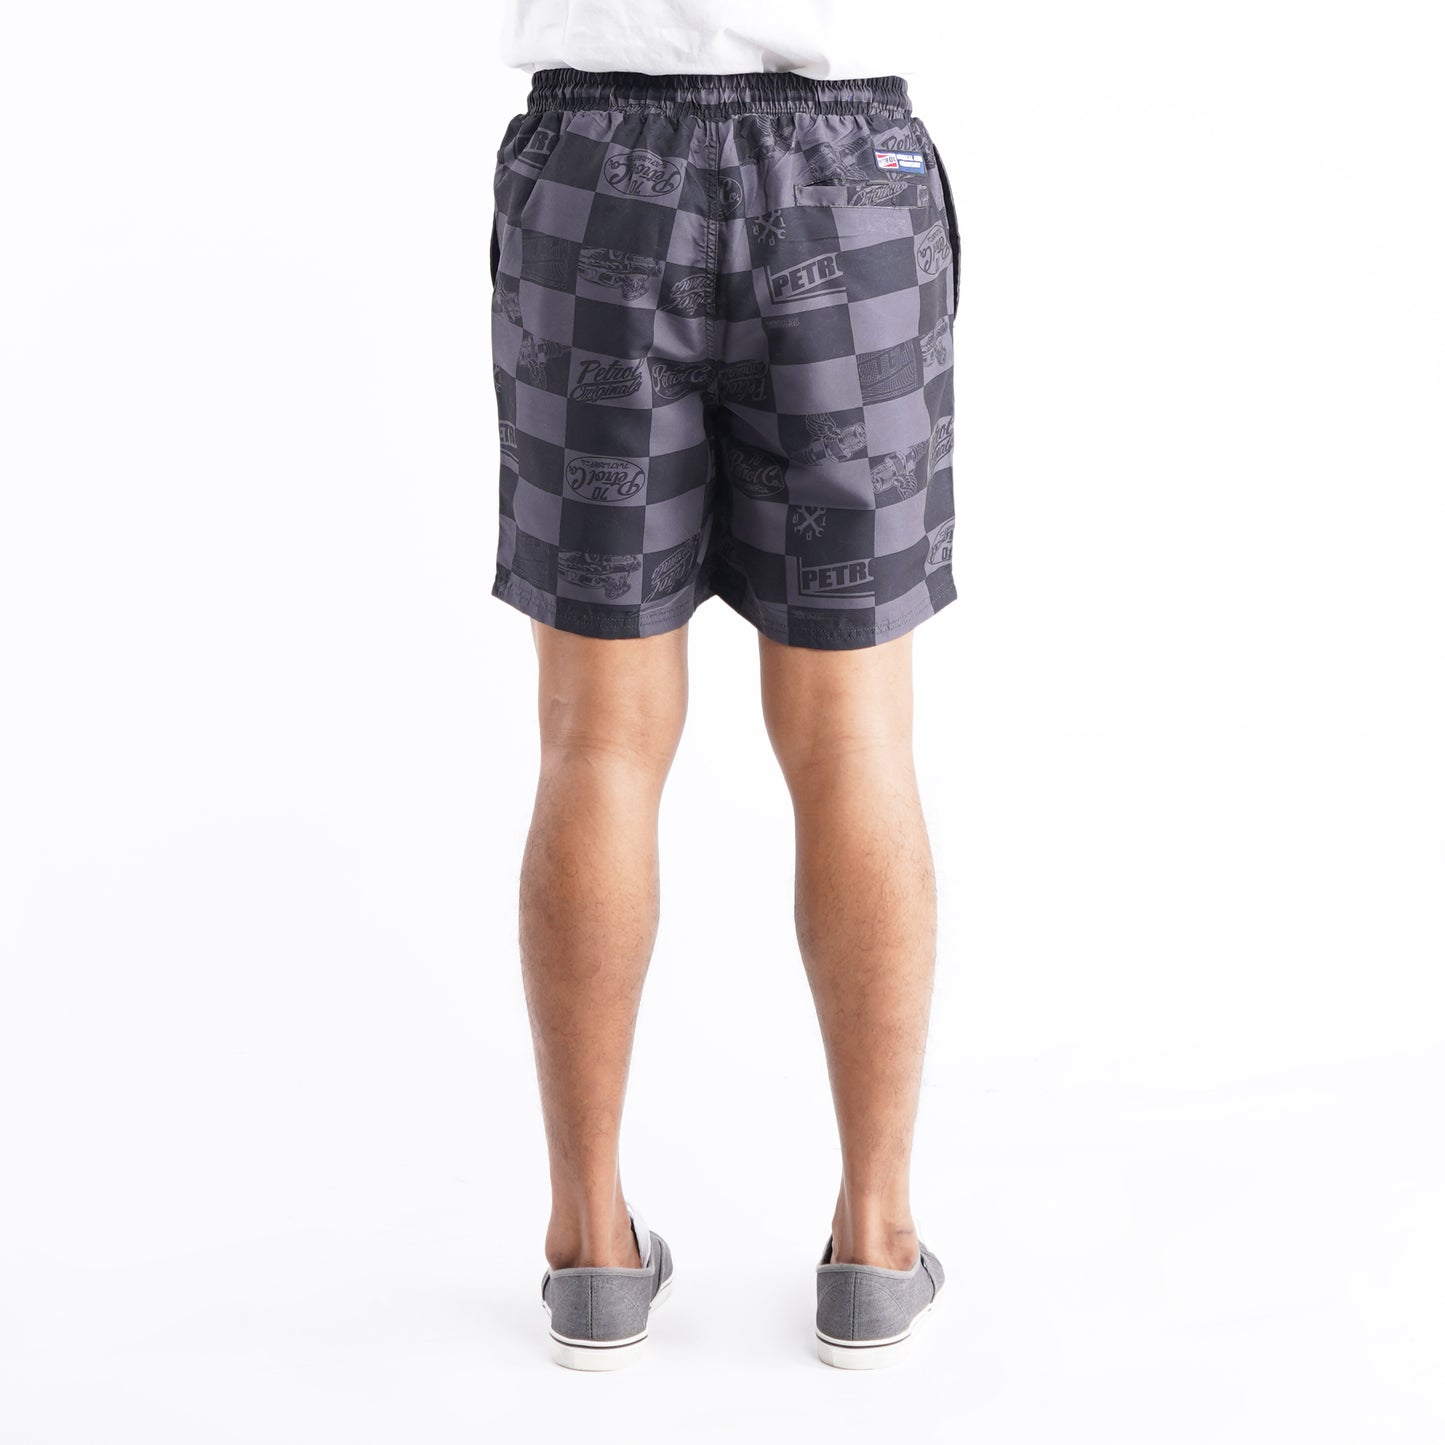 Petrol Modified Non Denim Board Shorts for Men Regular Fitting Garment Wash Cotton Fabric Casual Short Black Swim short for Men 133794 (Black)